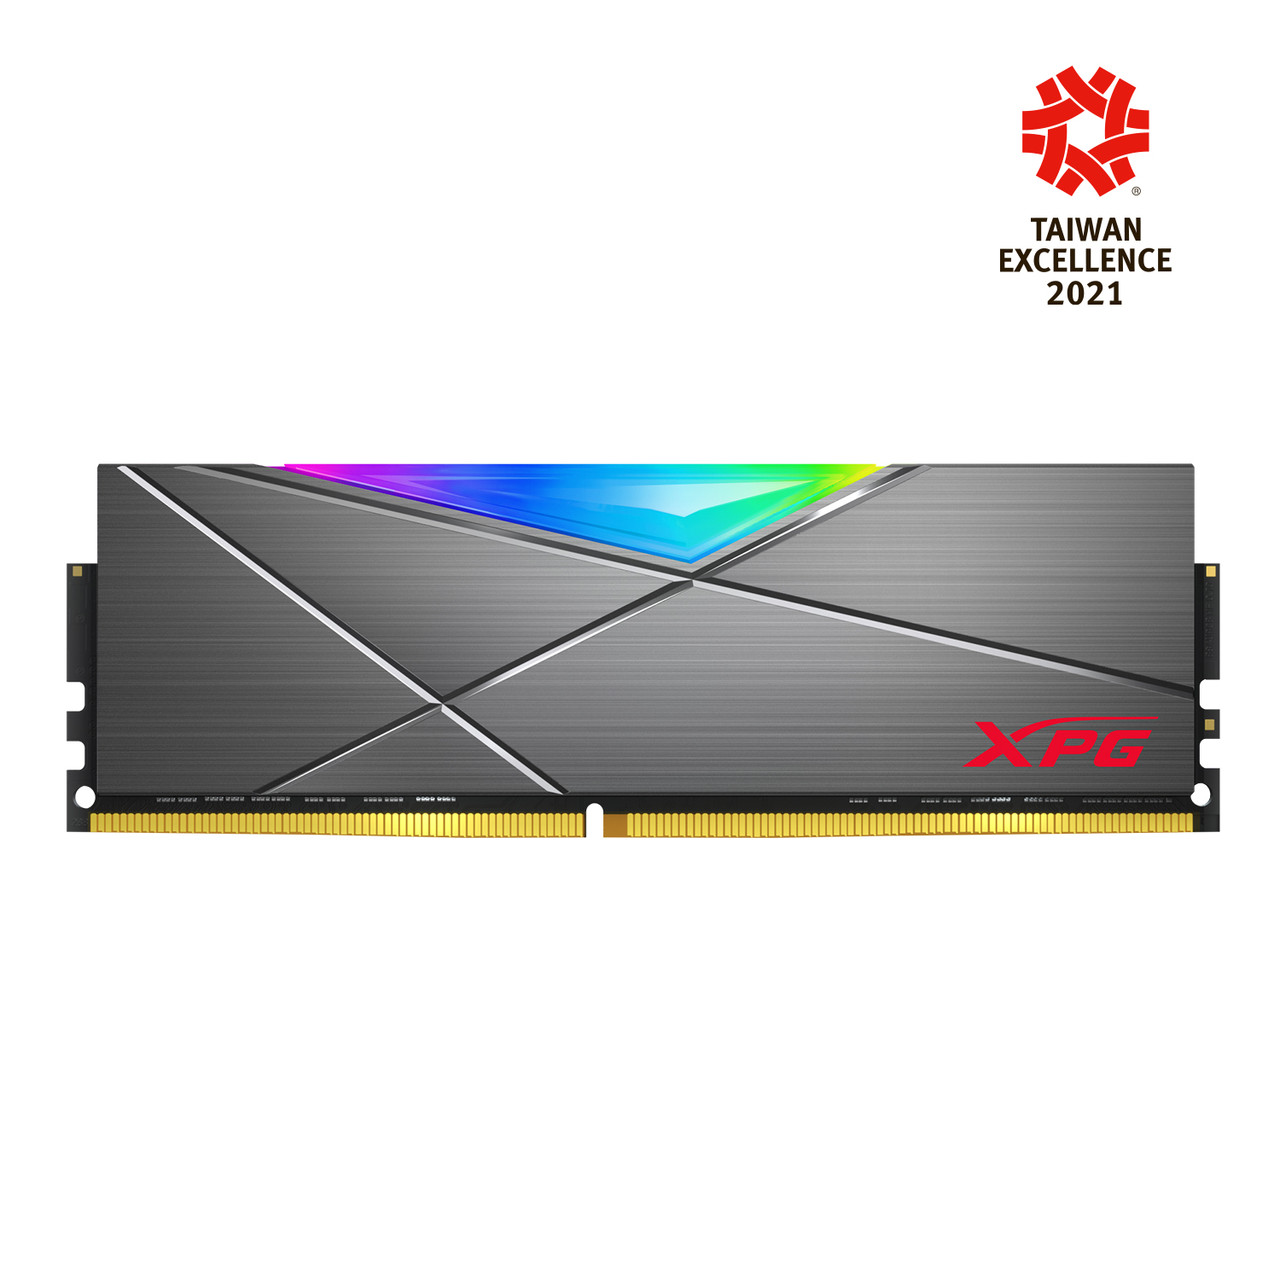 XPG SPECTRIX D50 RGB Desktop Memory: (2x16GB) DDR4 3600MHz CL18-22-22 | RGB w/ Grey Heatsink - 2PK | RAM PC4-28800 -